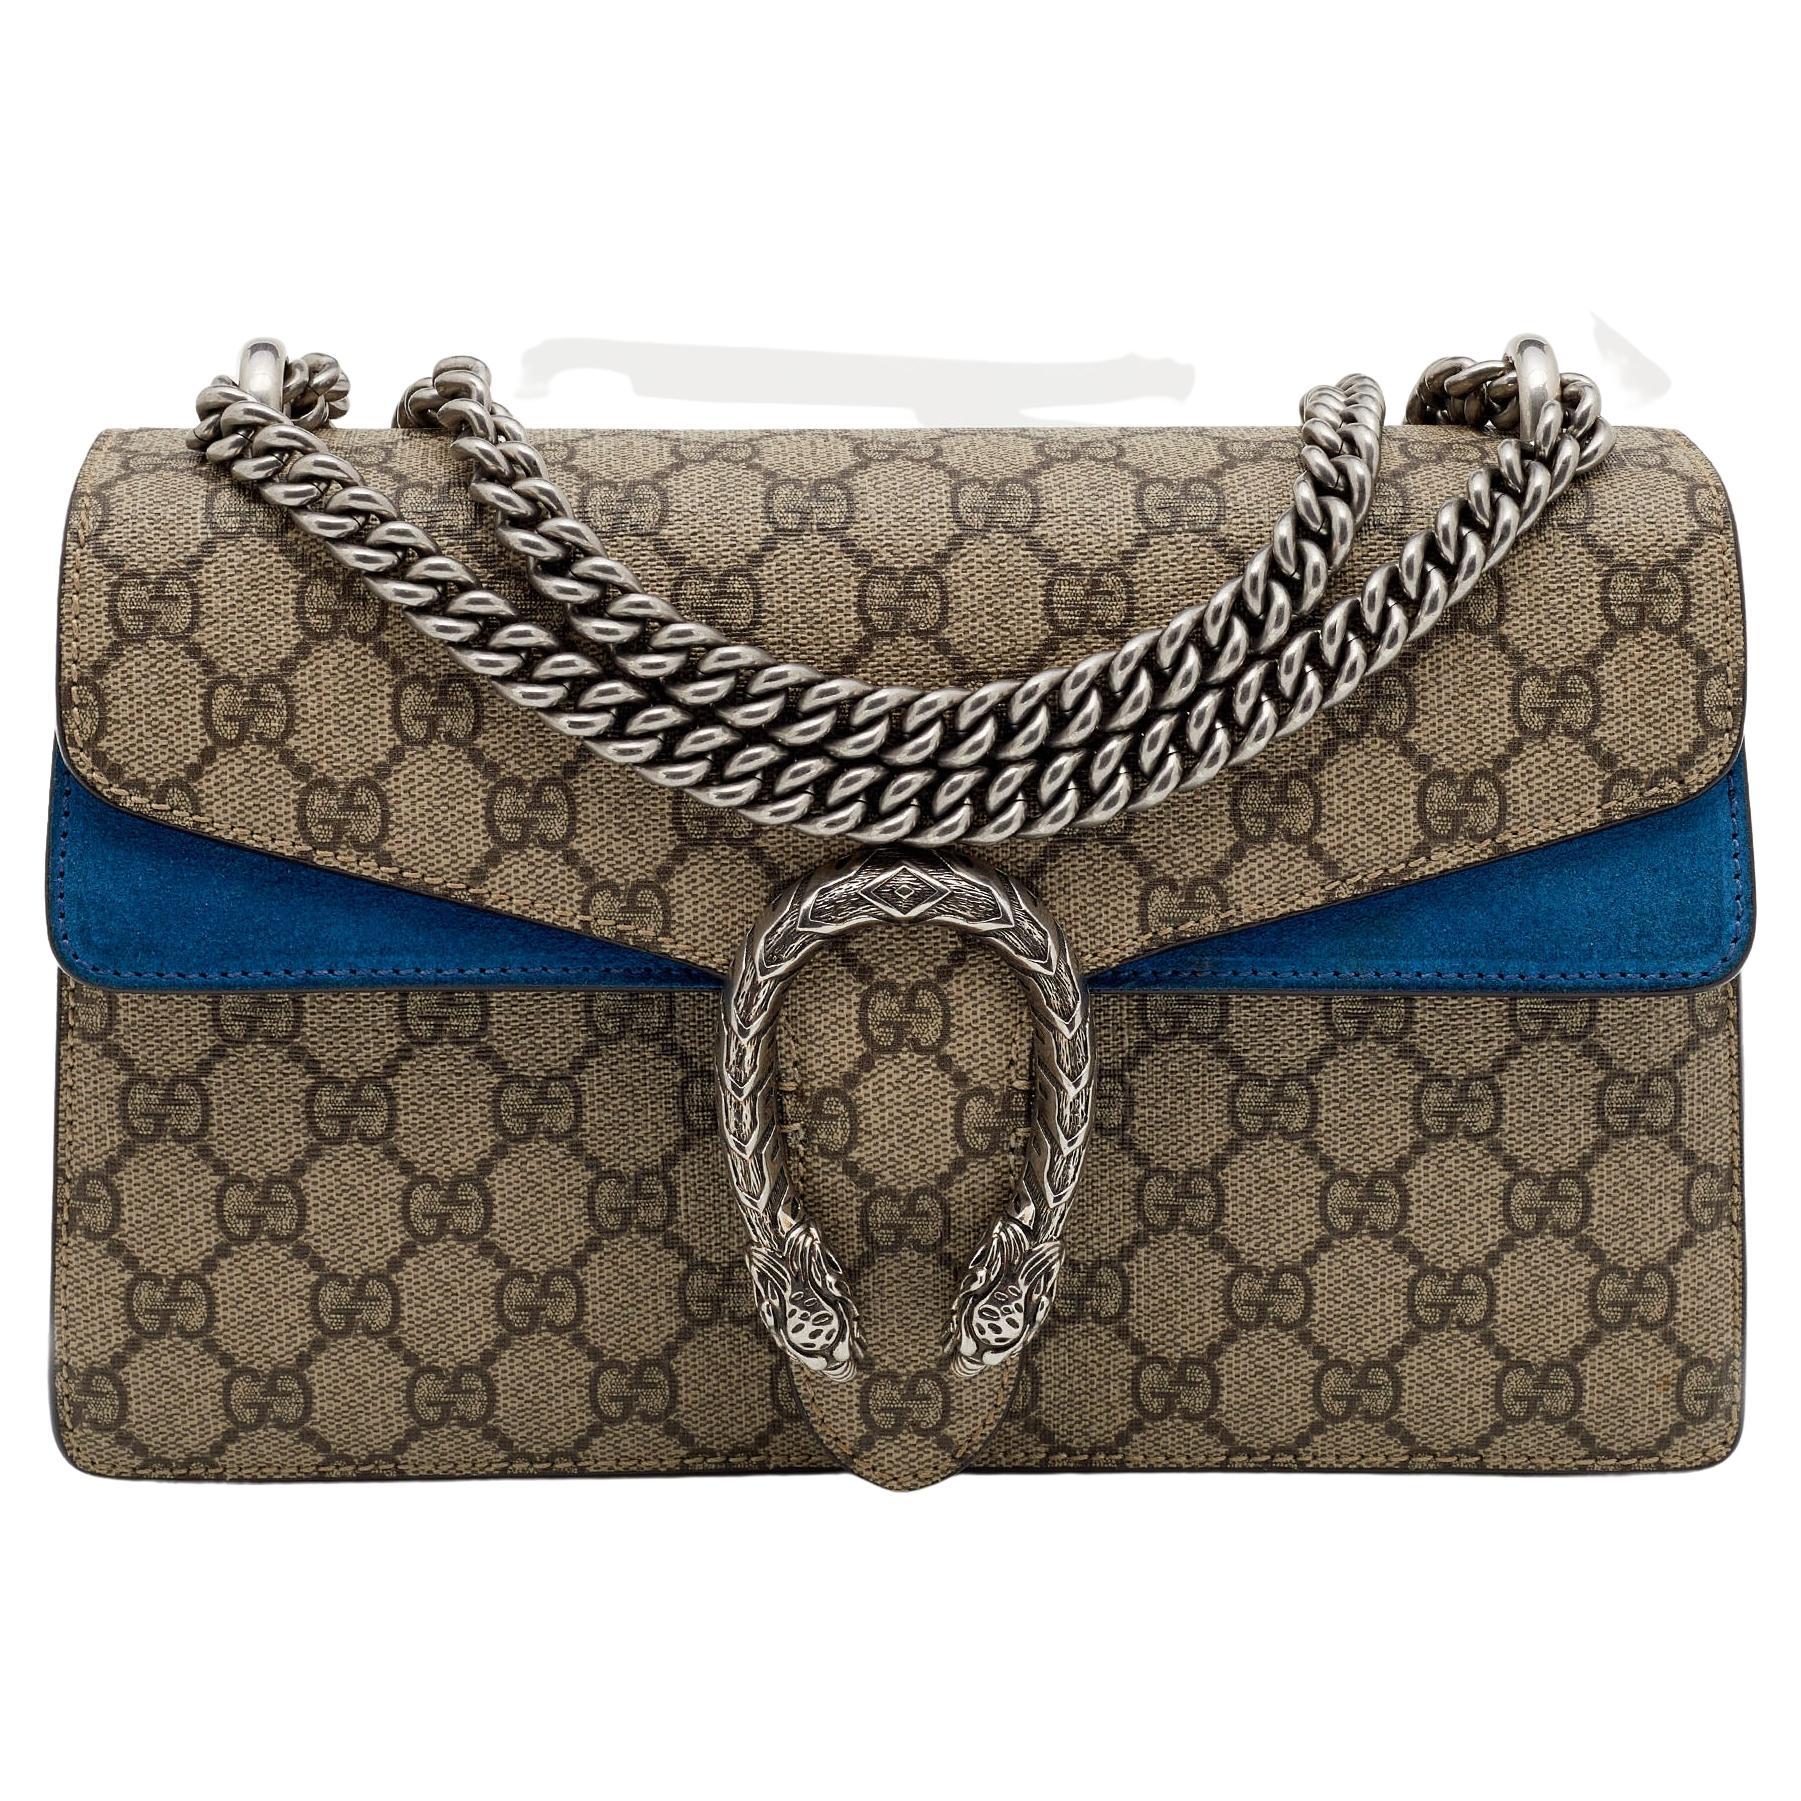 Gucci Beige/Blue GG Supreme Canvas And Suede Medium Dionysus Shoulder Bag